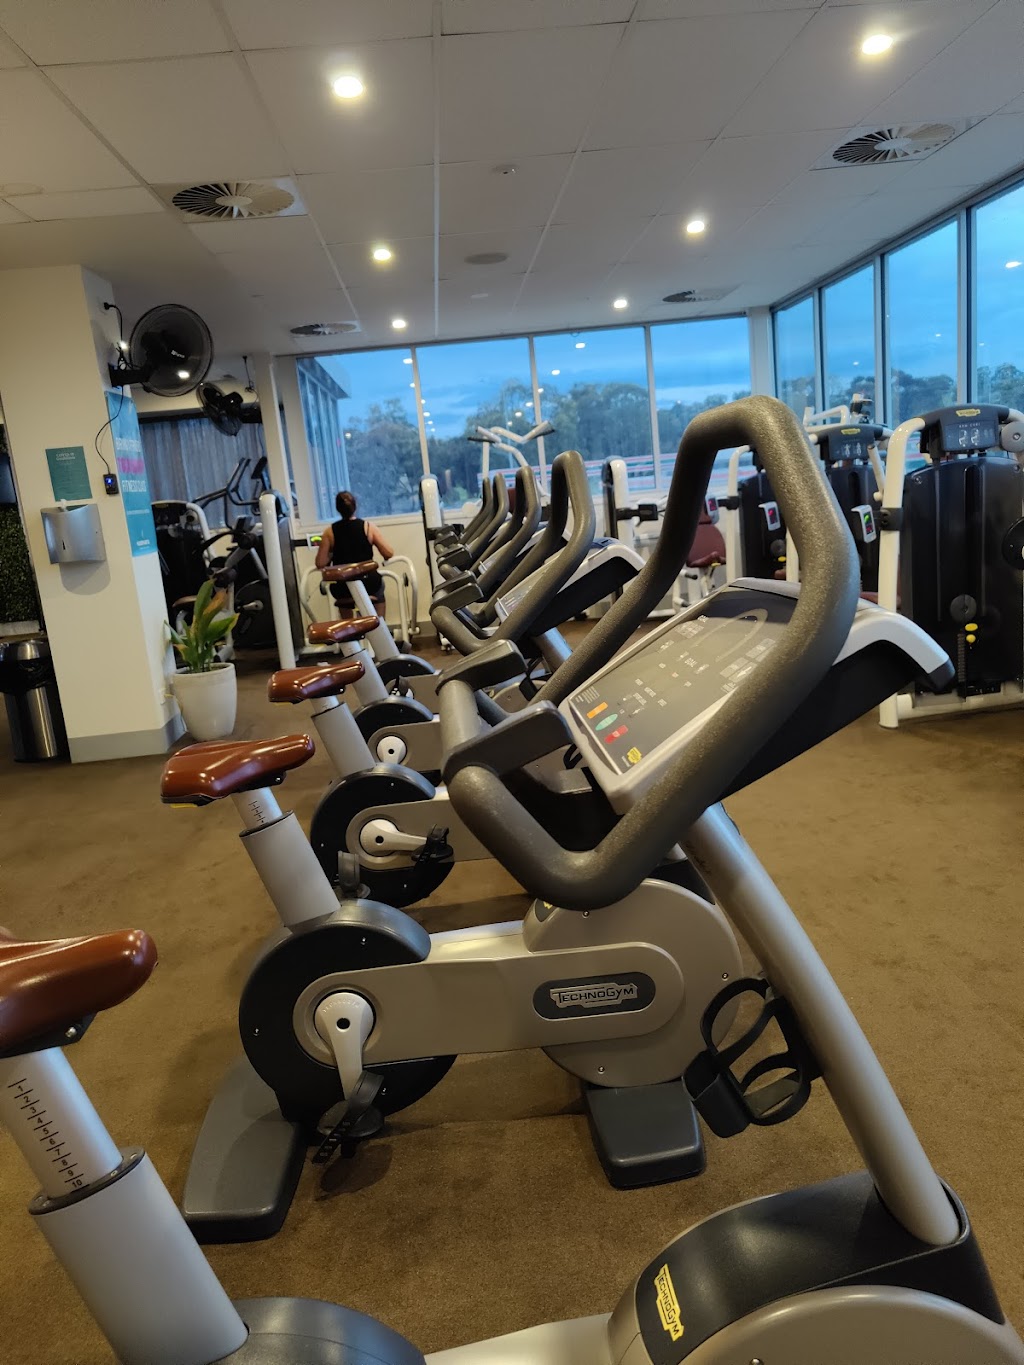 Samsara Womens Health Club Canberra | gym | 33 Gartside St, Wanniassa ACT 2903, Australia | 0262967174 OR +61 2 6296 7174